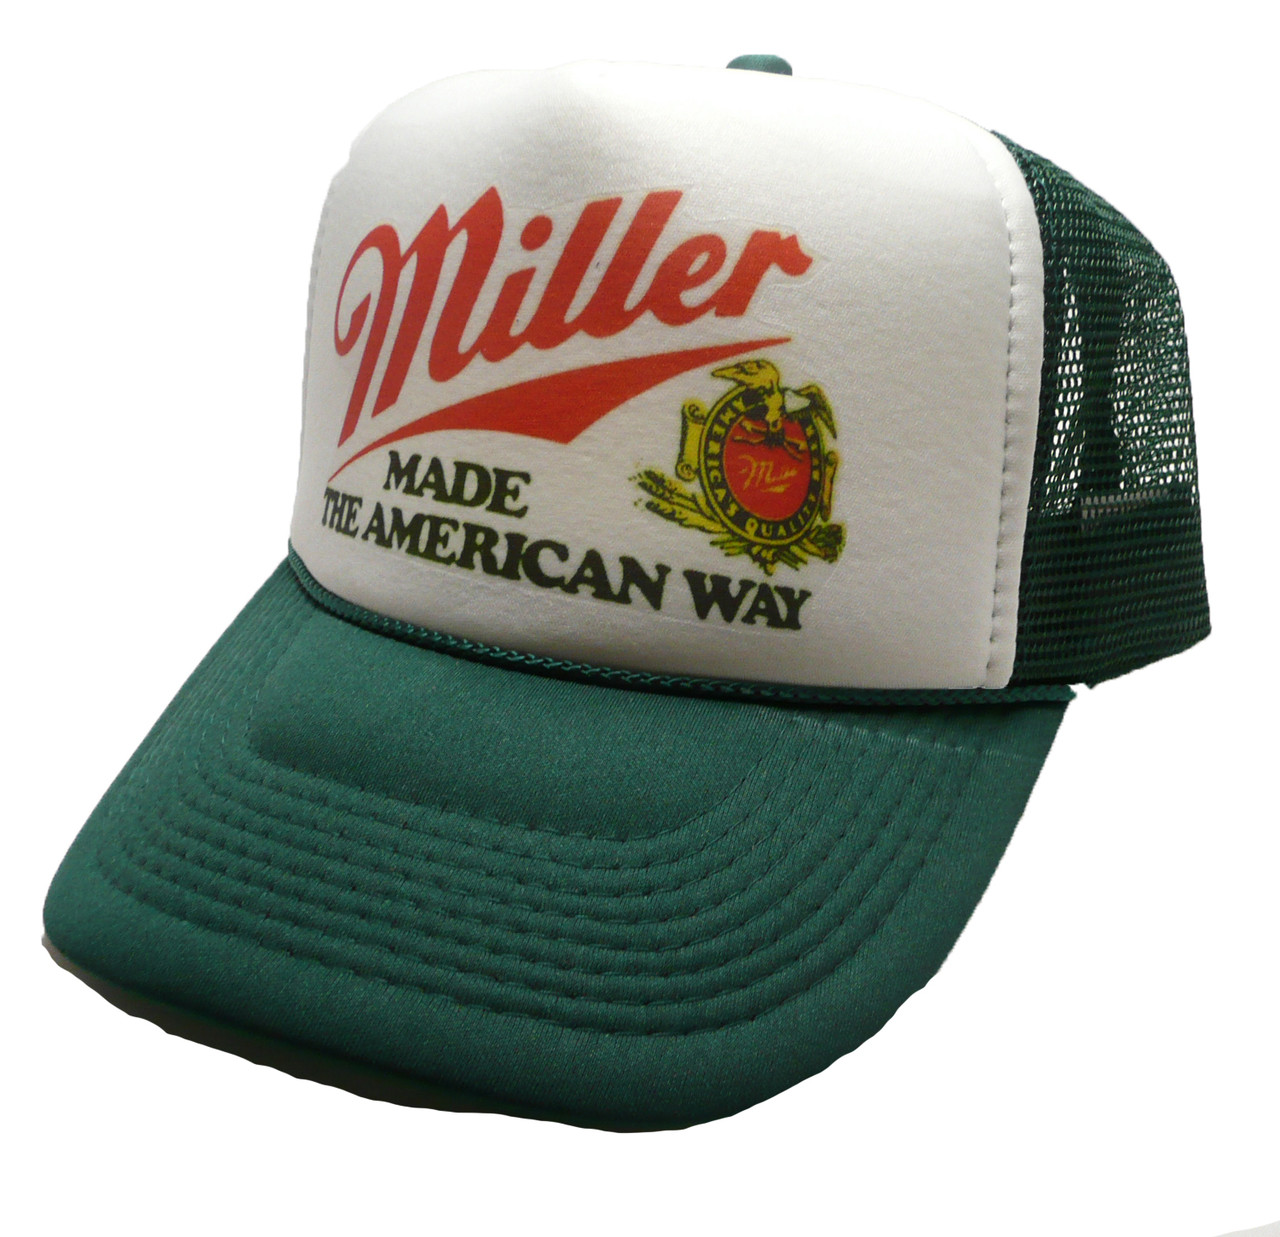 Miller Beer Made The American Way Hat Miller Beer Hat Miller Hat Trucker Hat Beer Hats